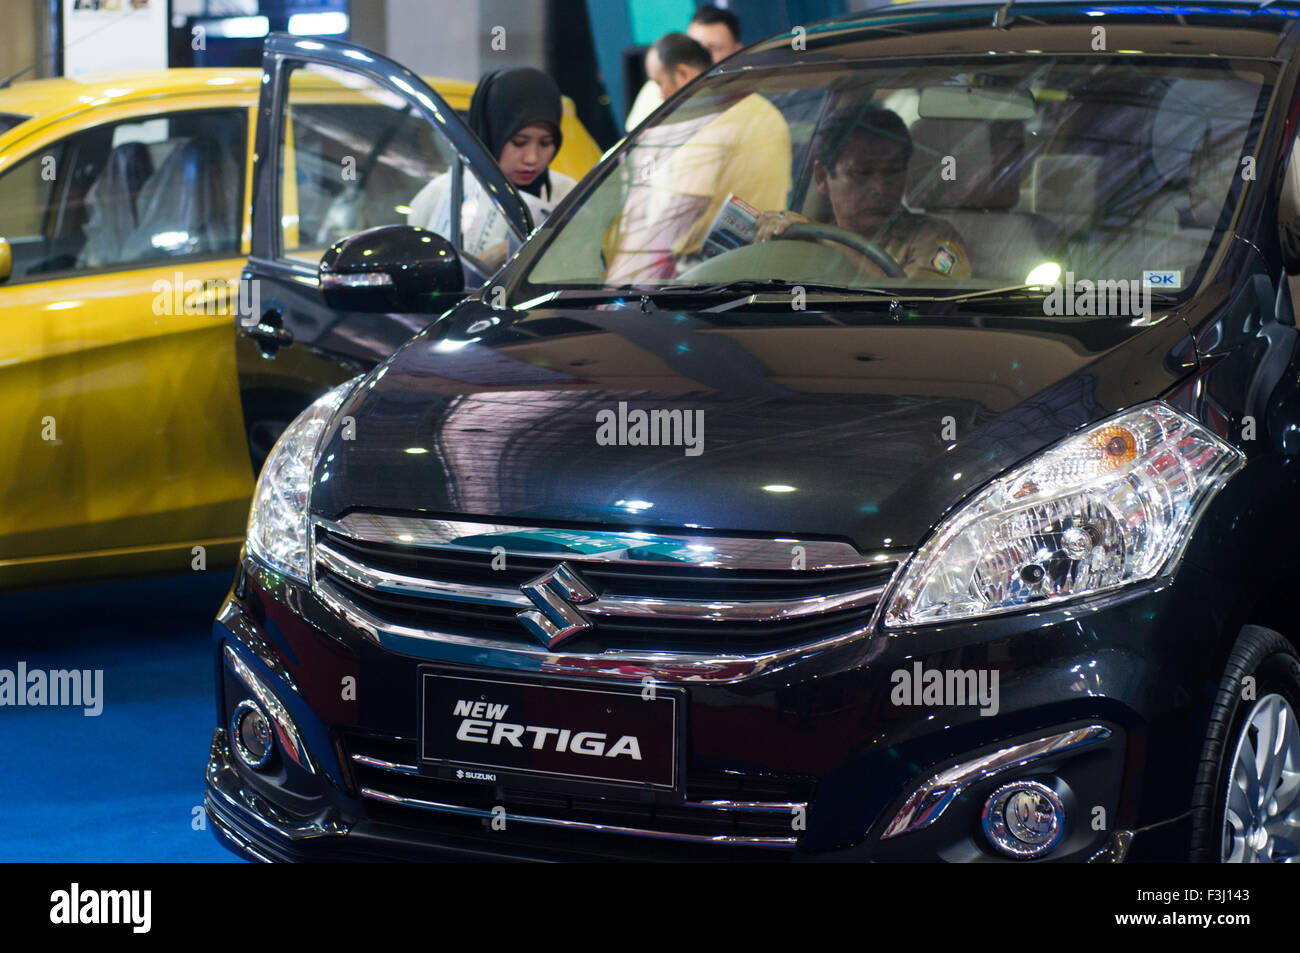 Suzuki New Ertiga in an autoshow. Stock Photo